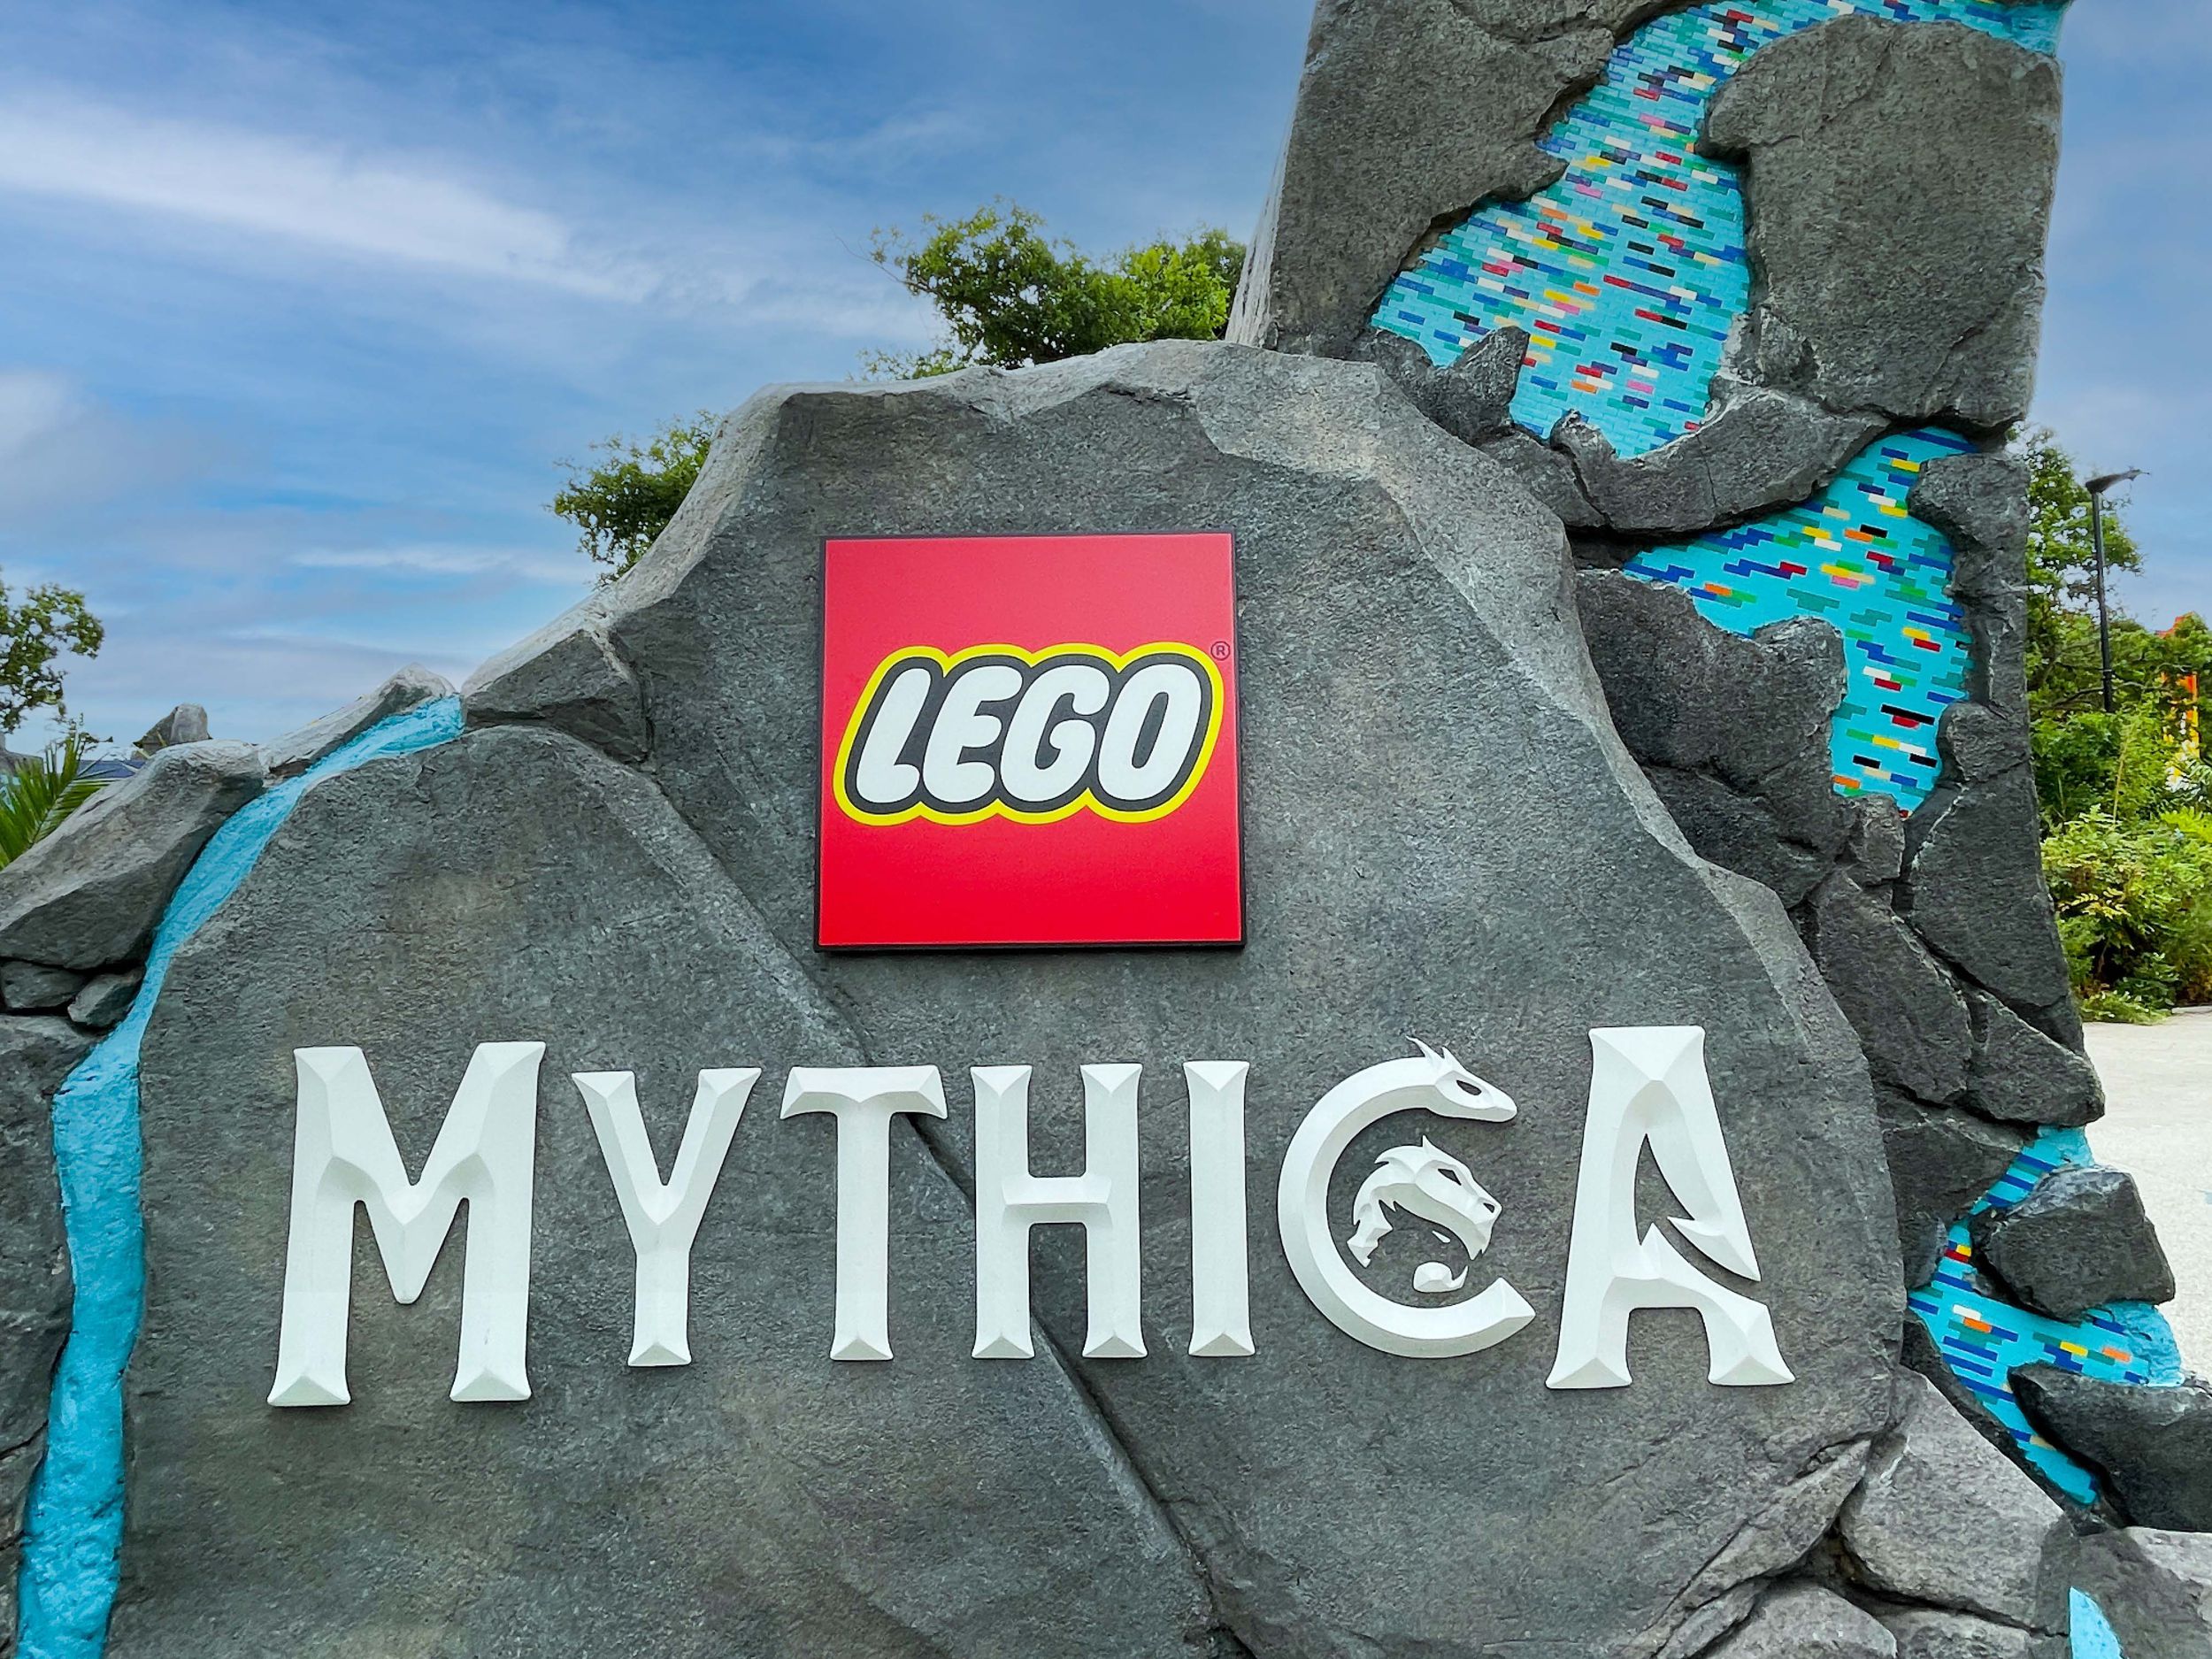 LEGO Mythica